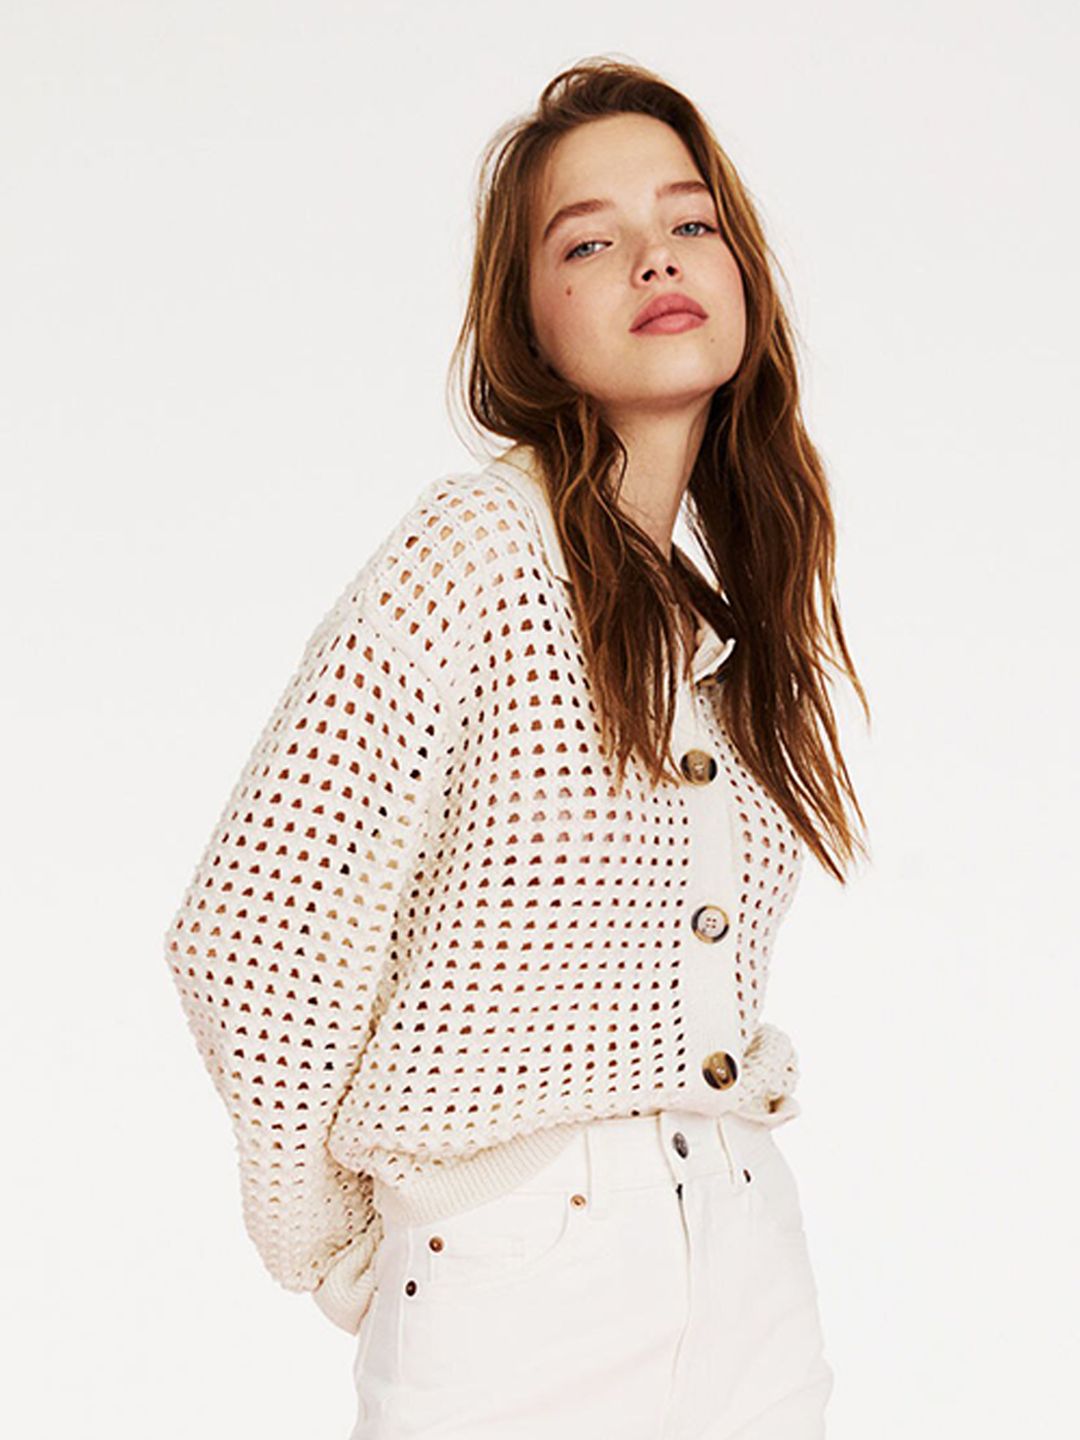 H&M Girls White Crocheted Cardigan Price in India